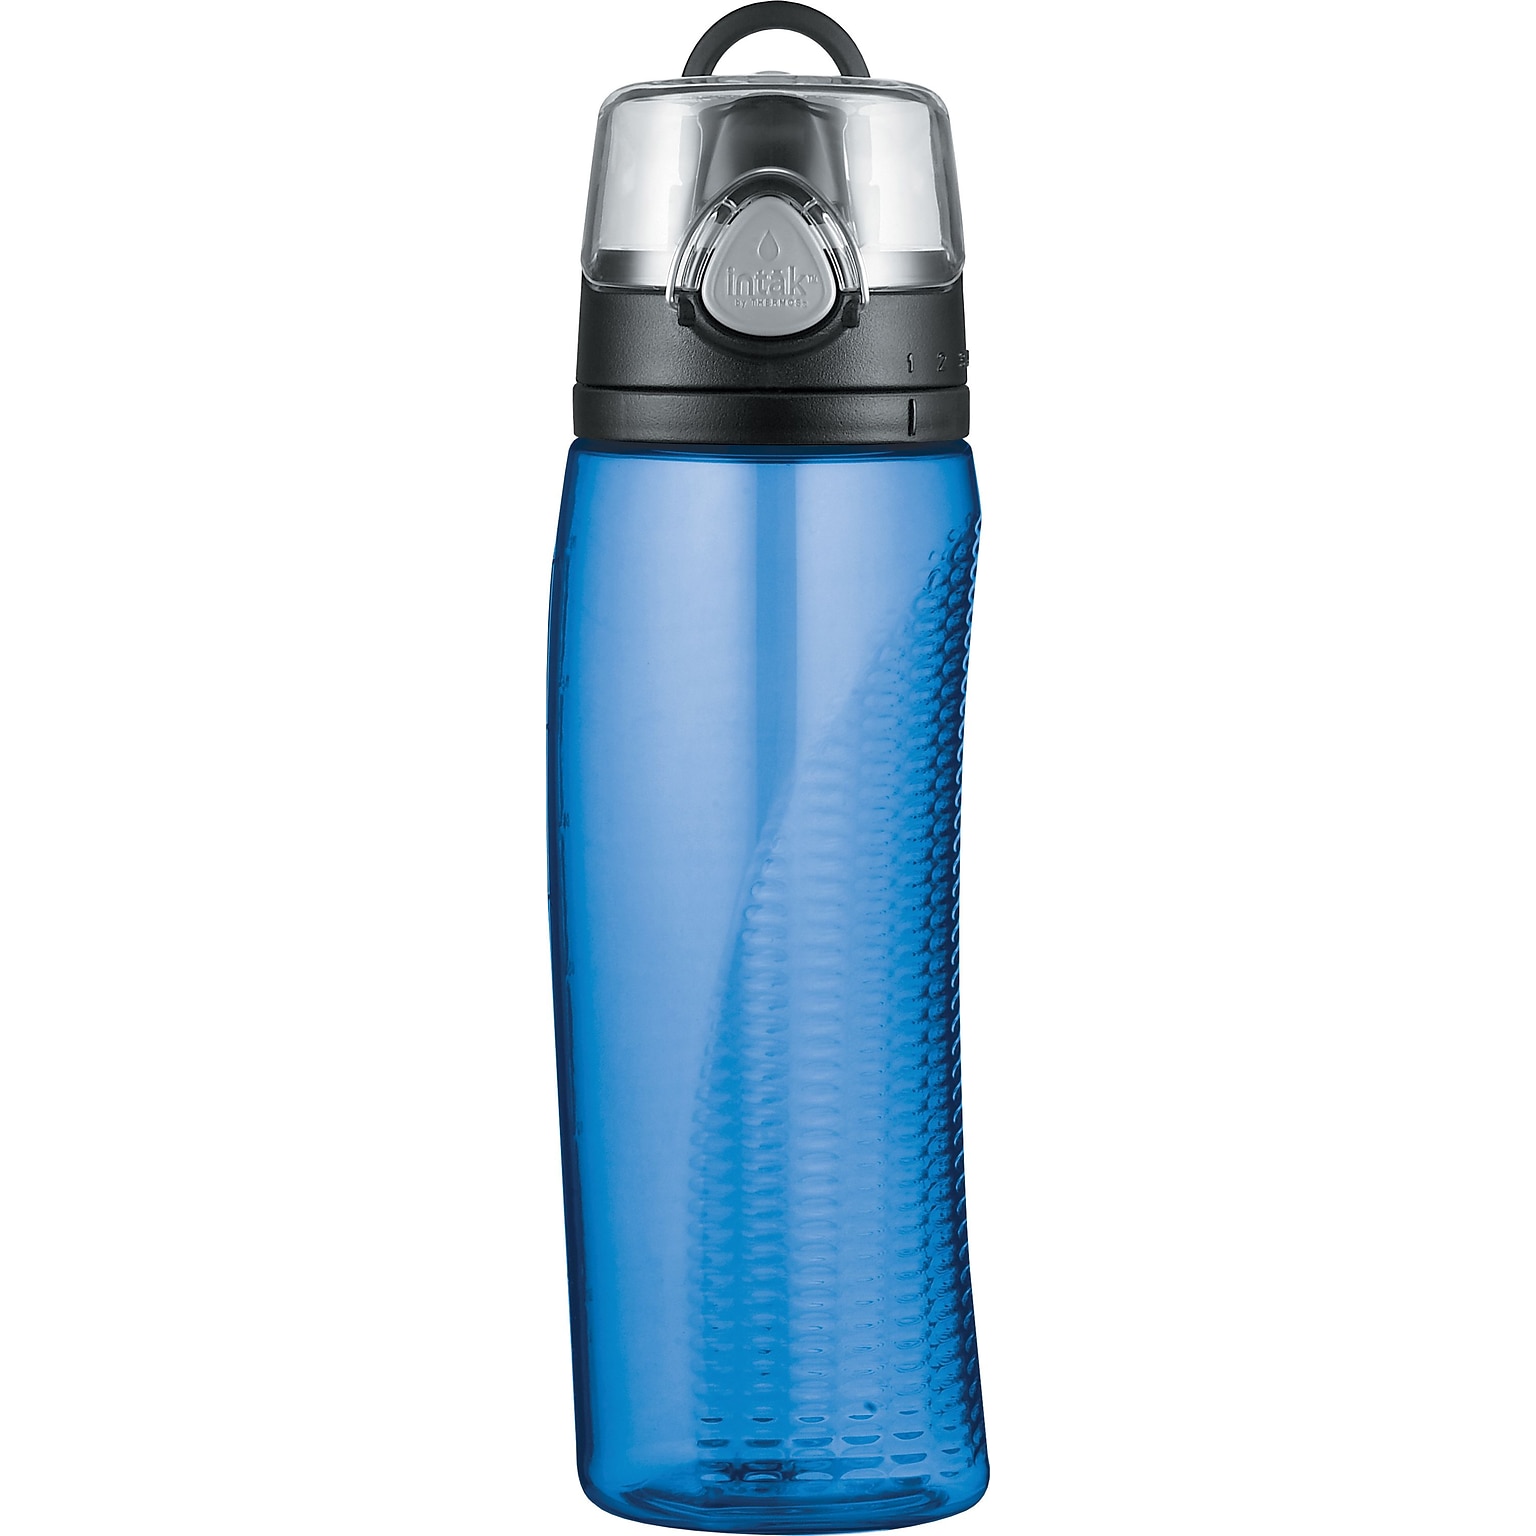 Thermos Intak Plastic Water Bottle, 24 oz., Blue (HP4100TLTRI6)